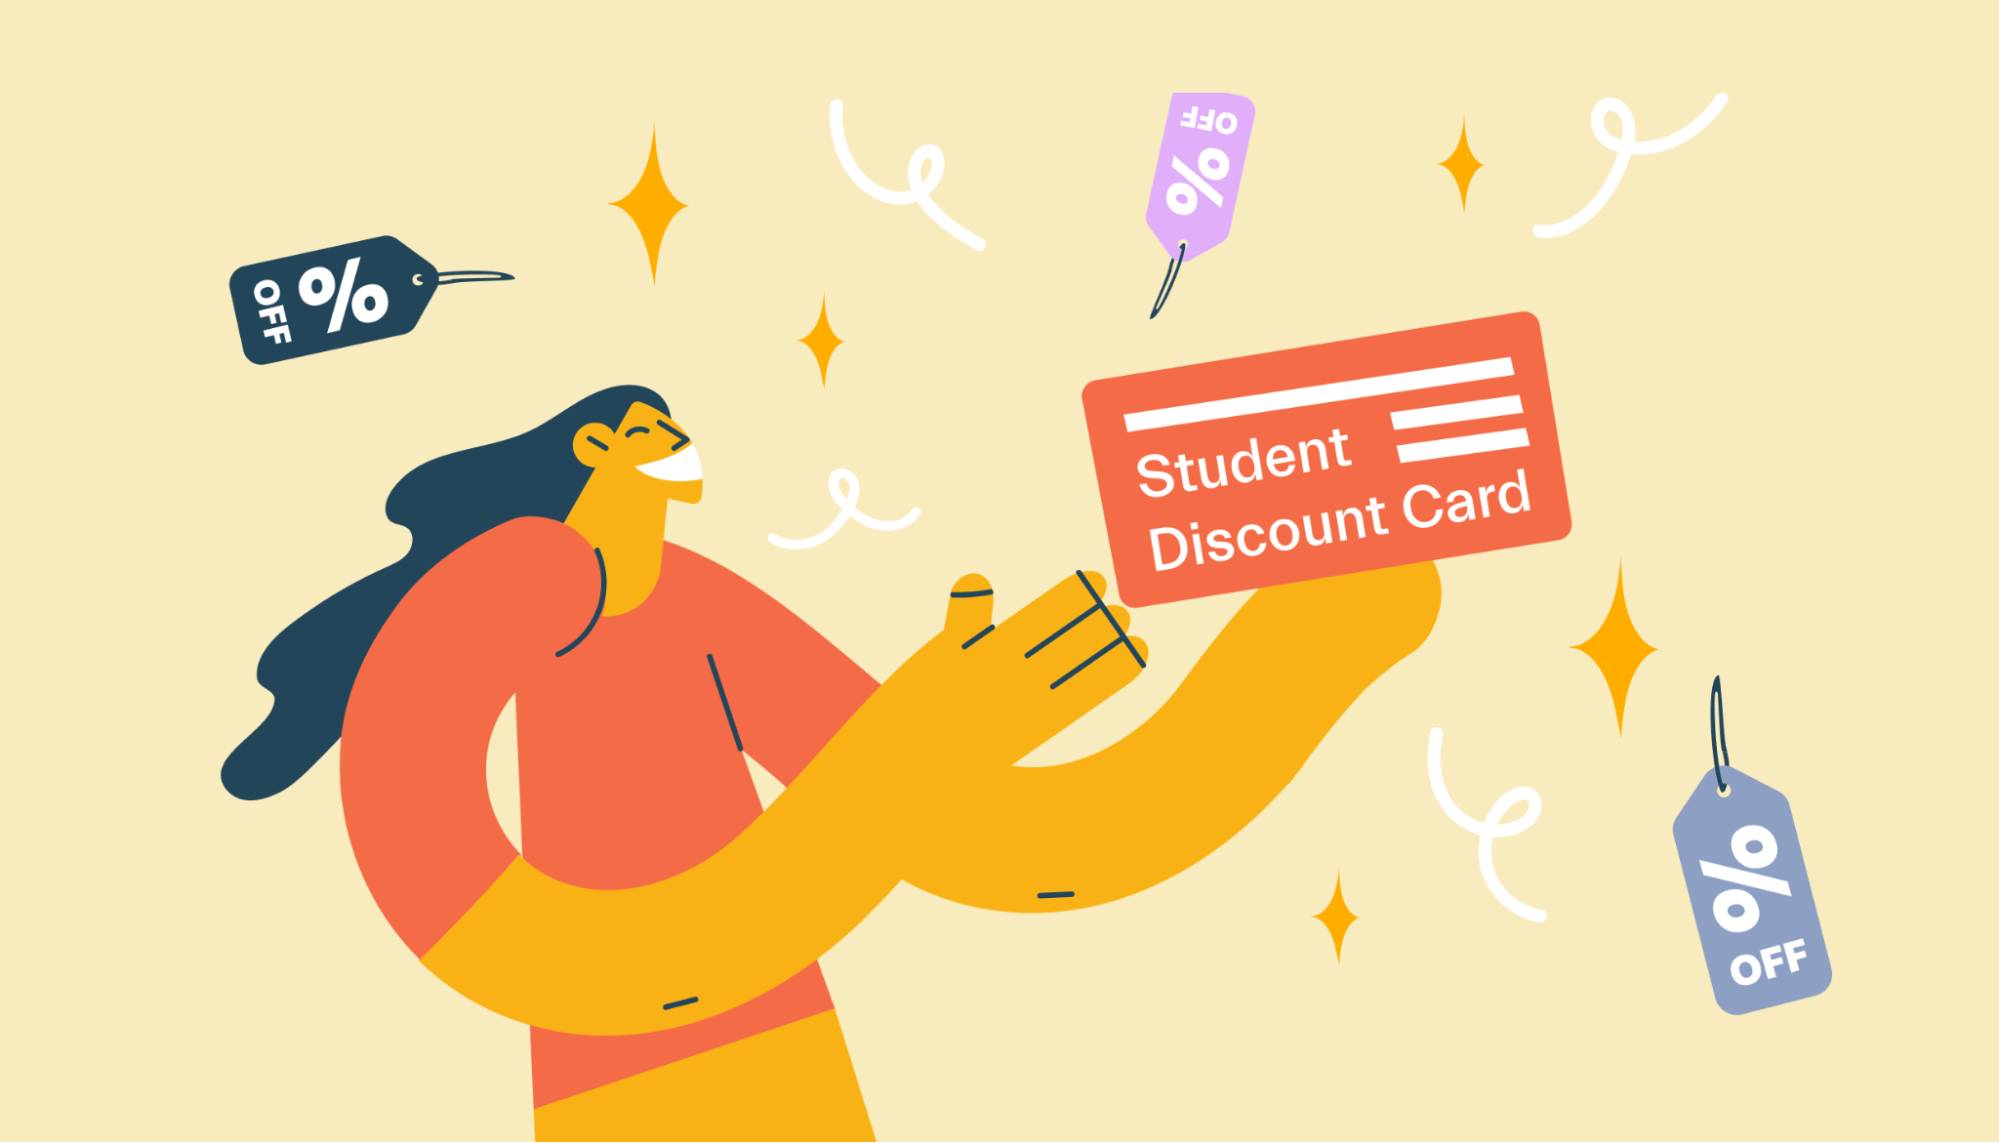 Student discounts